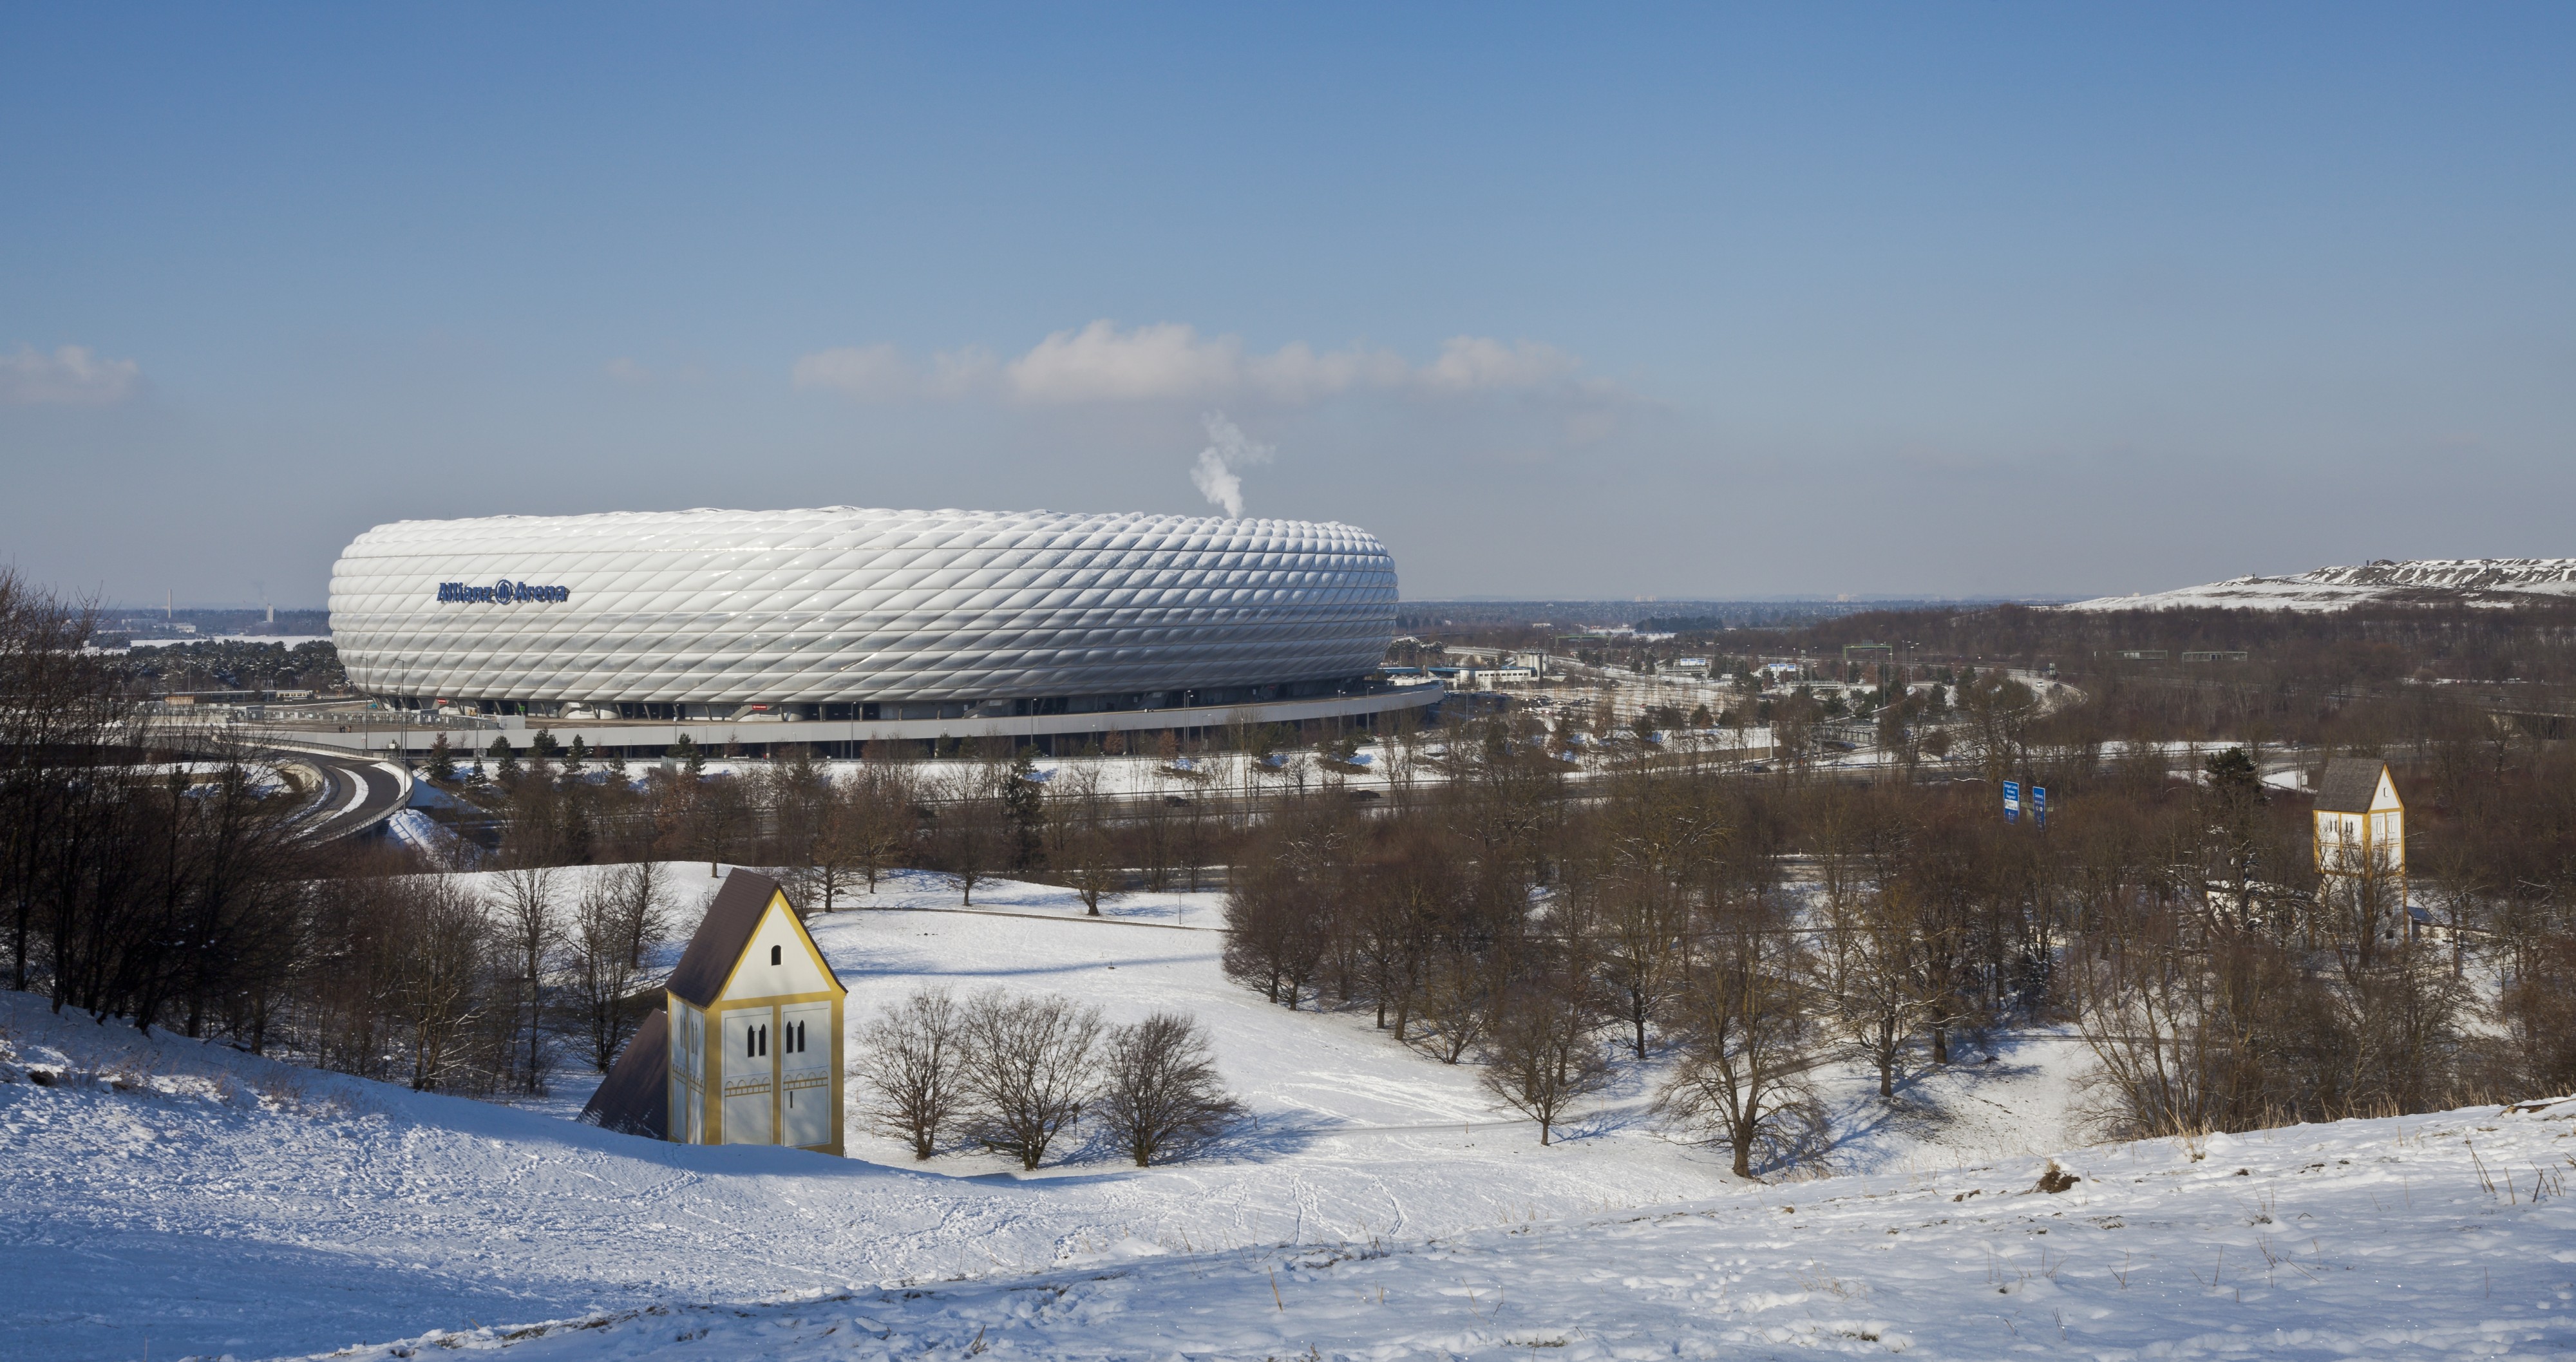 Allianz Arena, Múnich, Alemania, 2013-02-11, DD 07